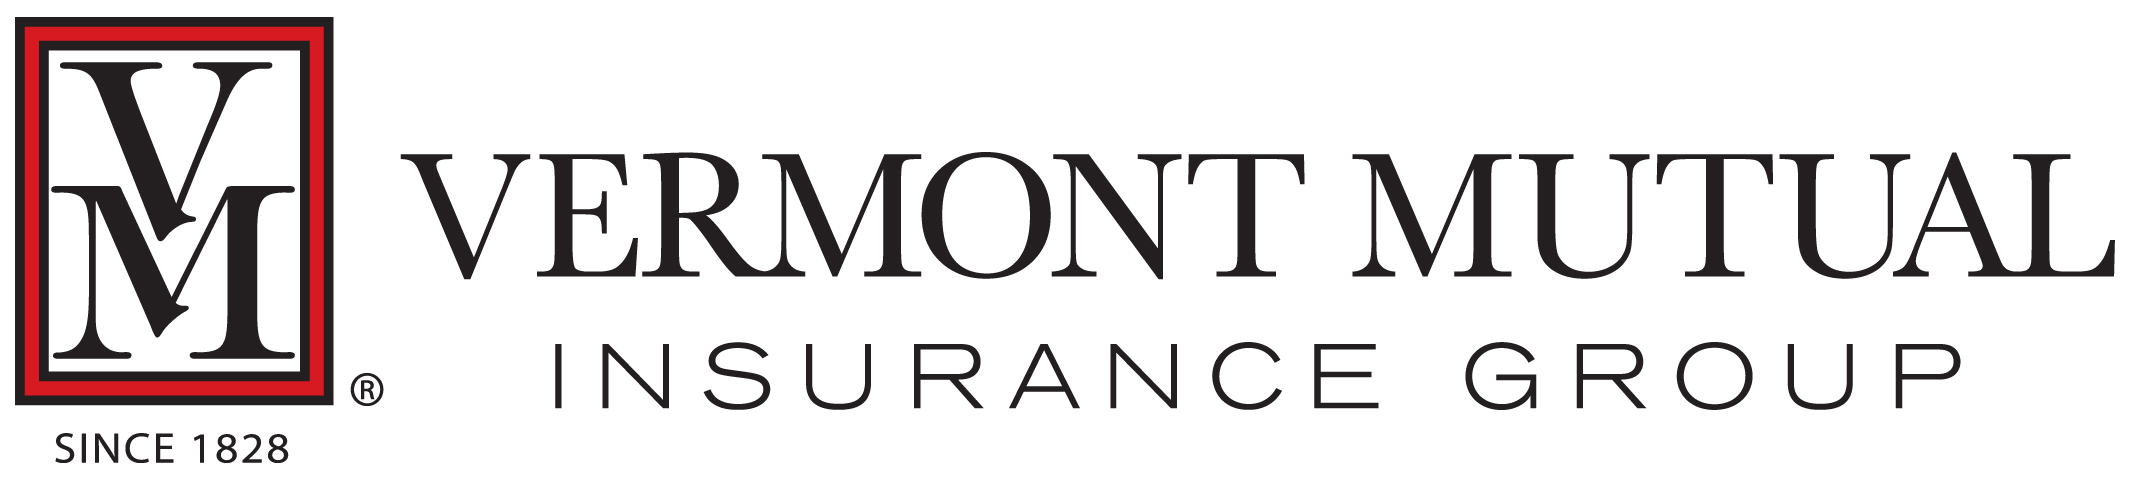 Vermont Mutual Insurance